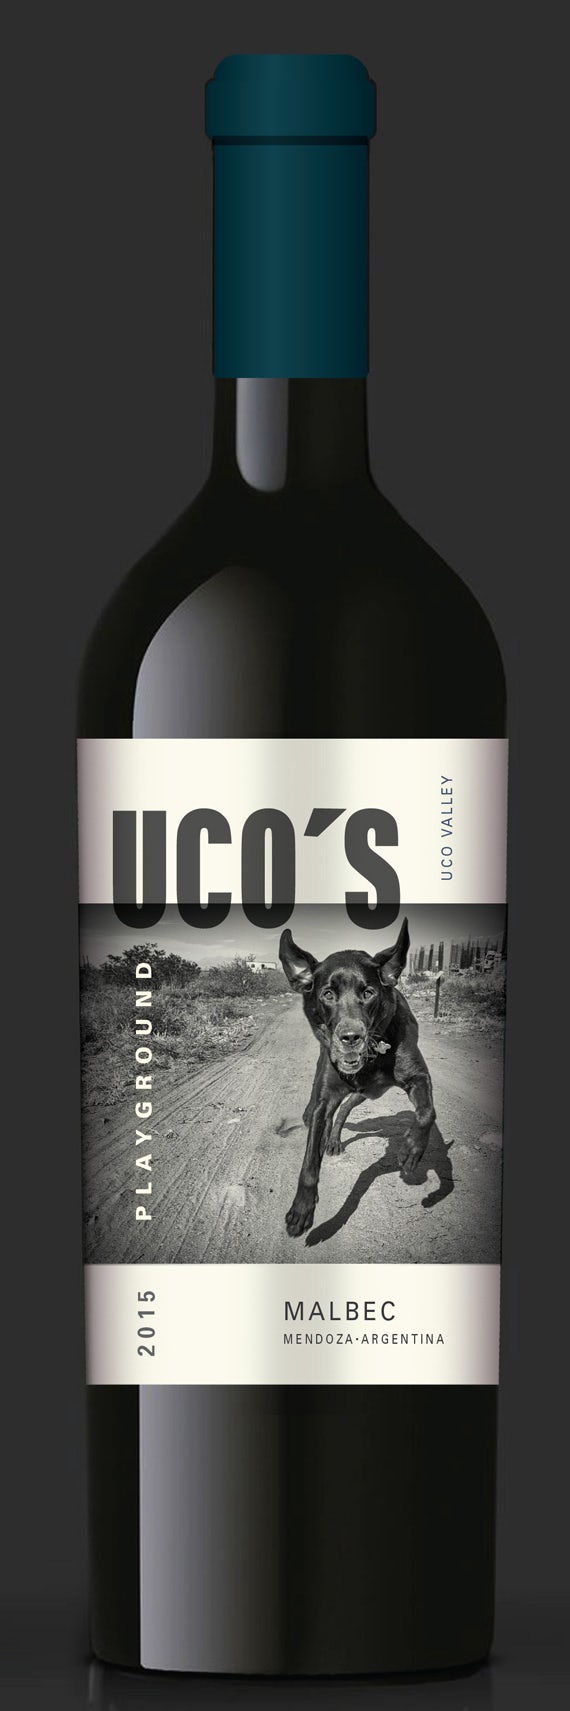 Modern wine label featuring dog